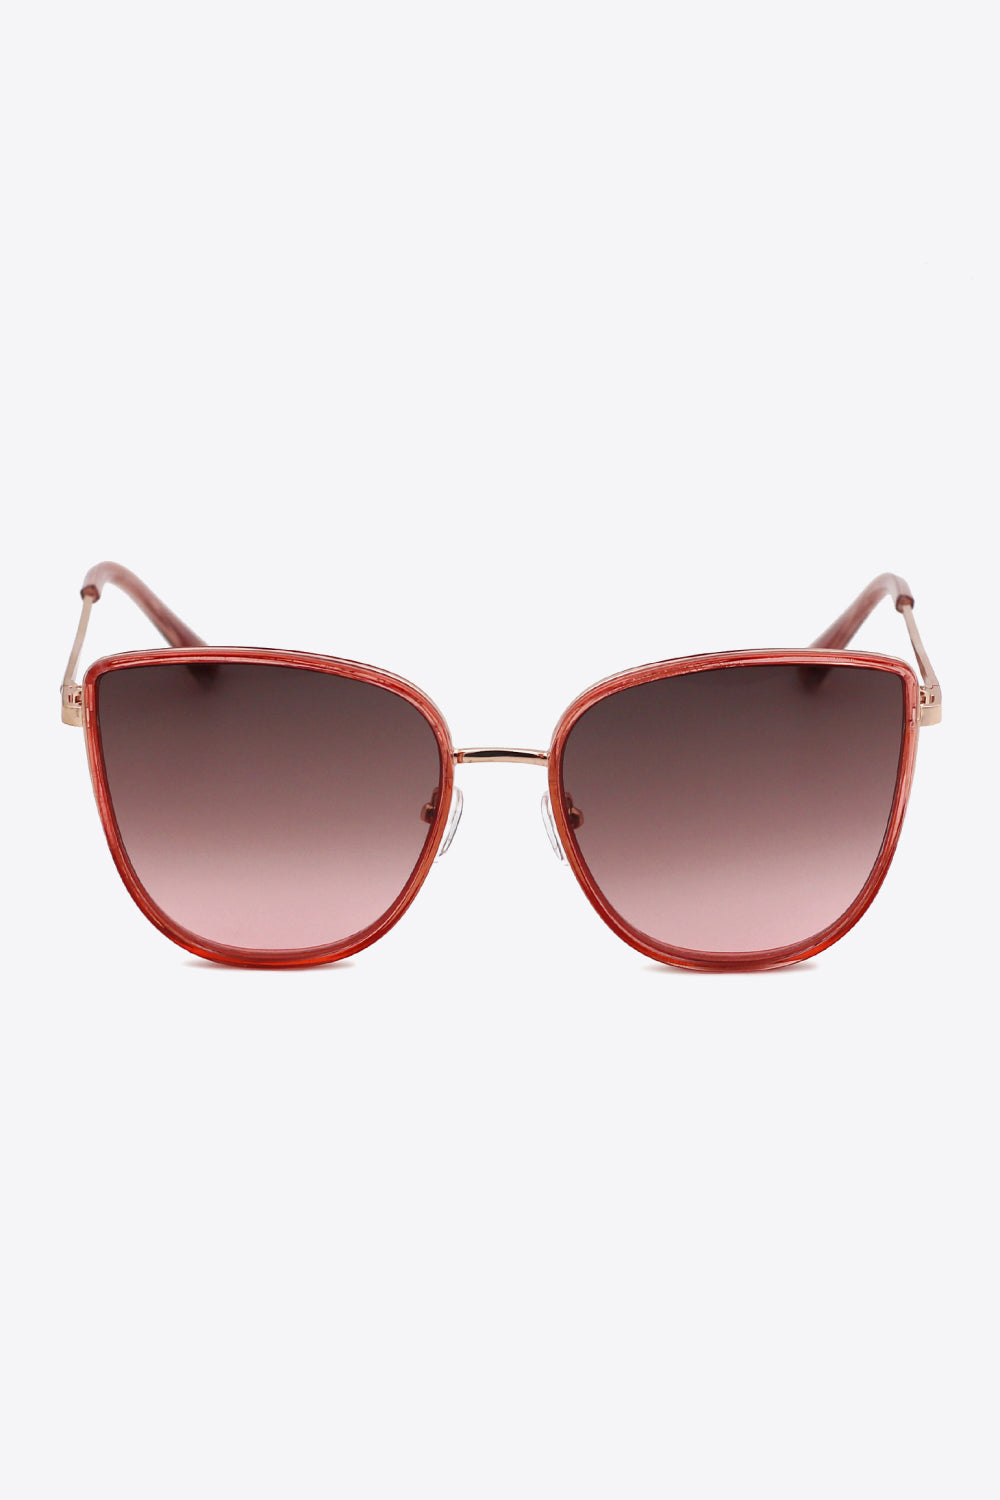 Full Rim Metal-Plastic Hybrid Frame Sunglasses - Sunglasses - FITGGINS